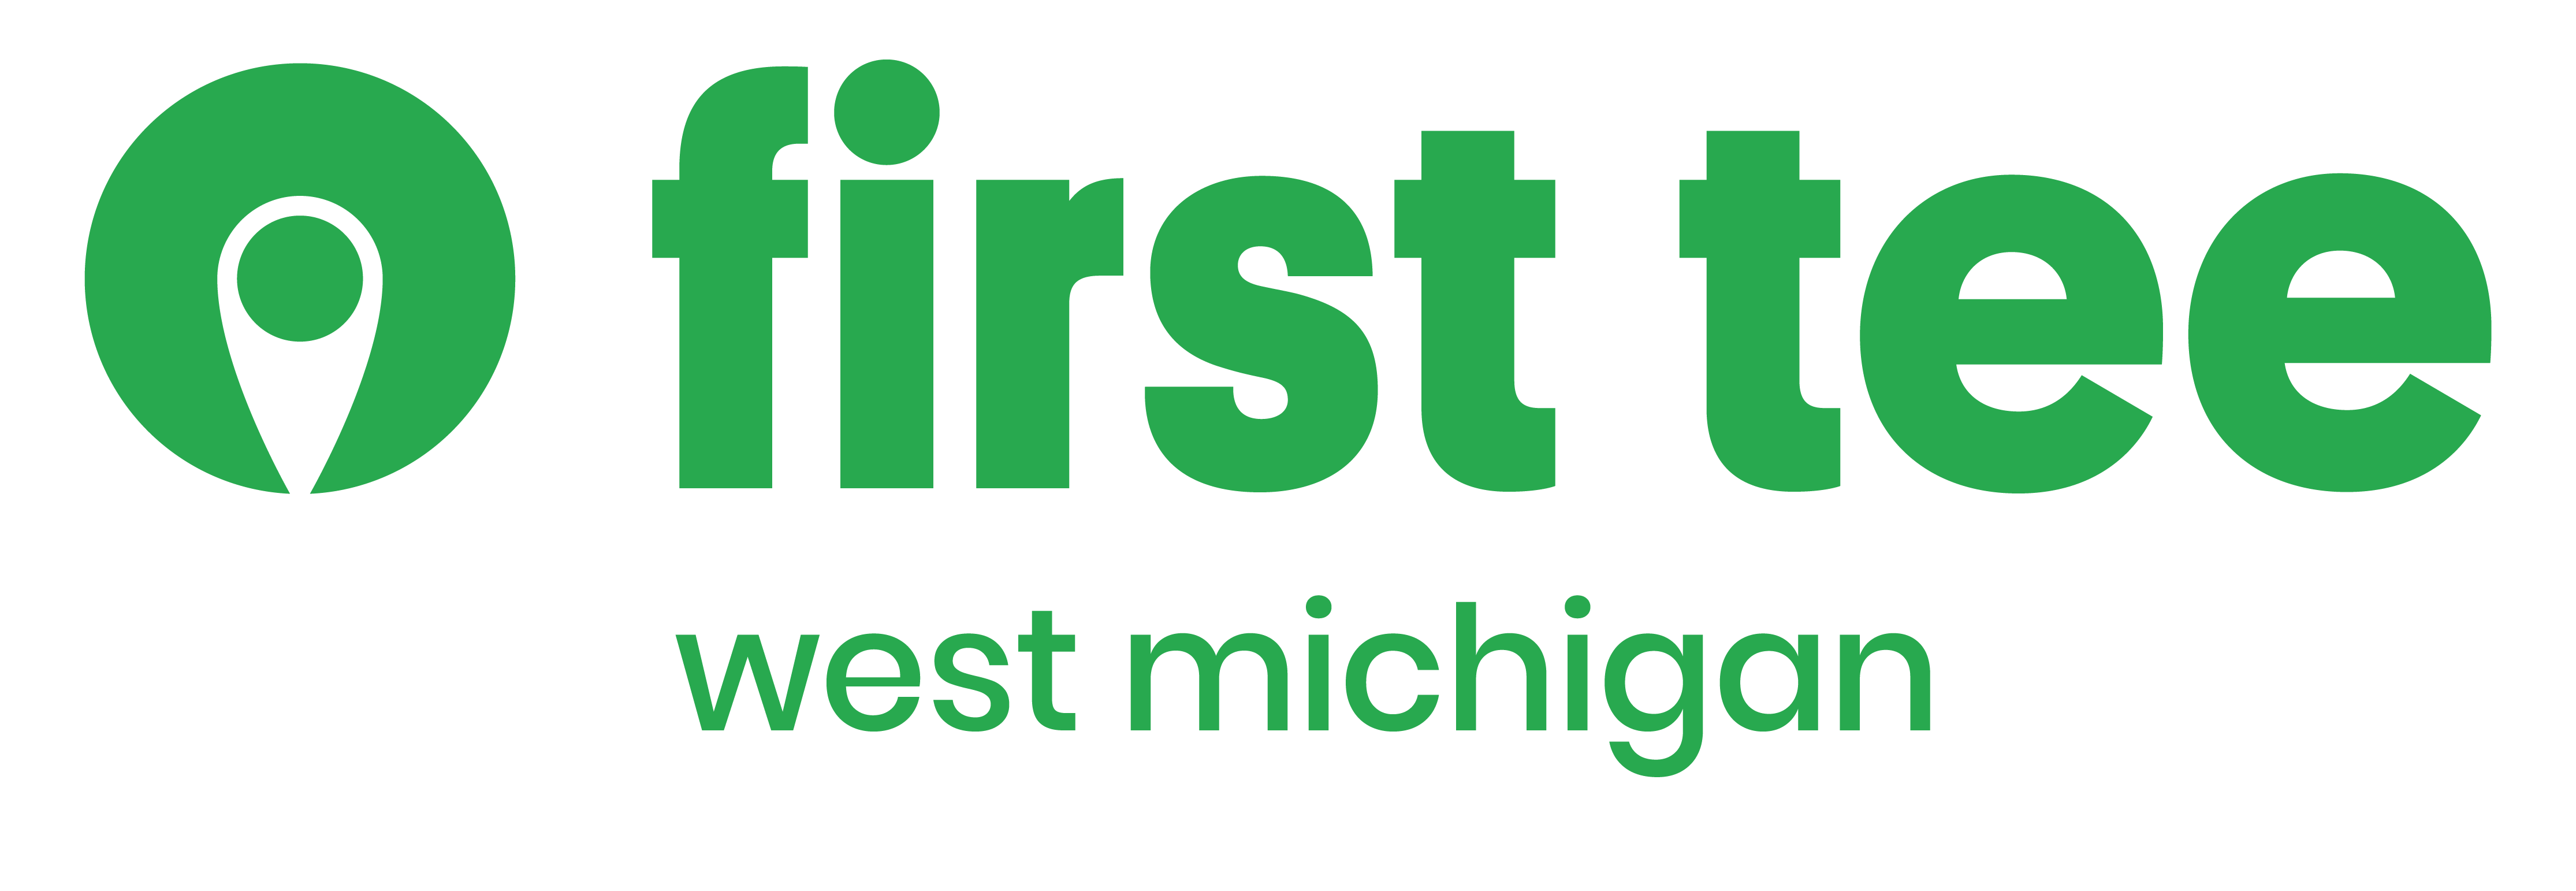 First Tee - West Michigan logo